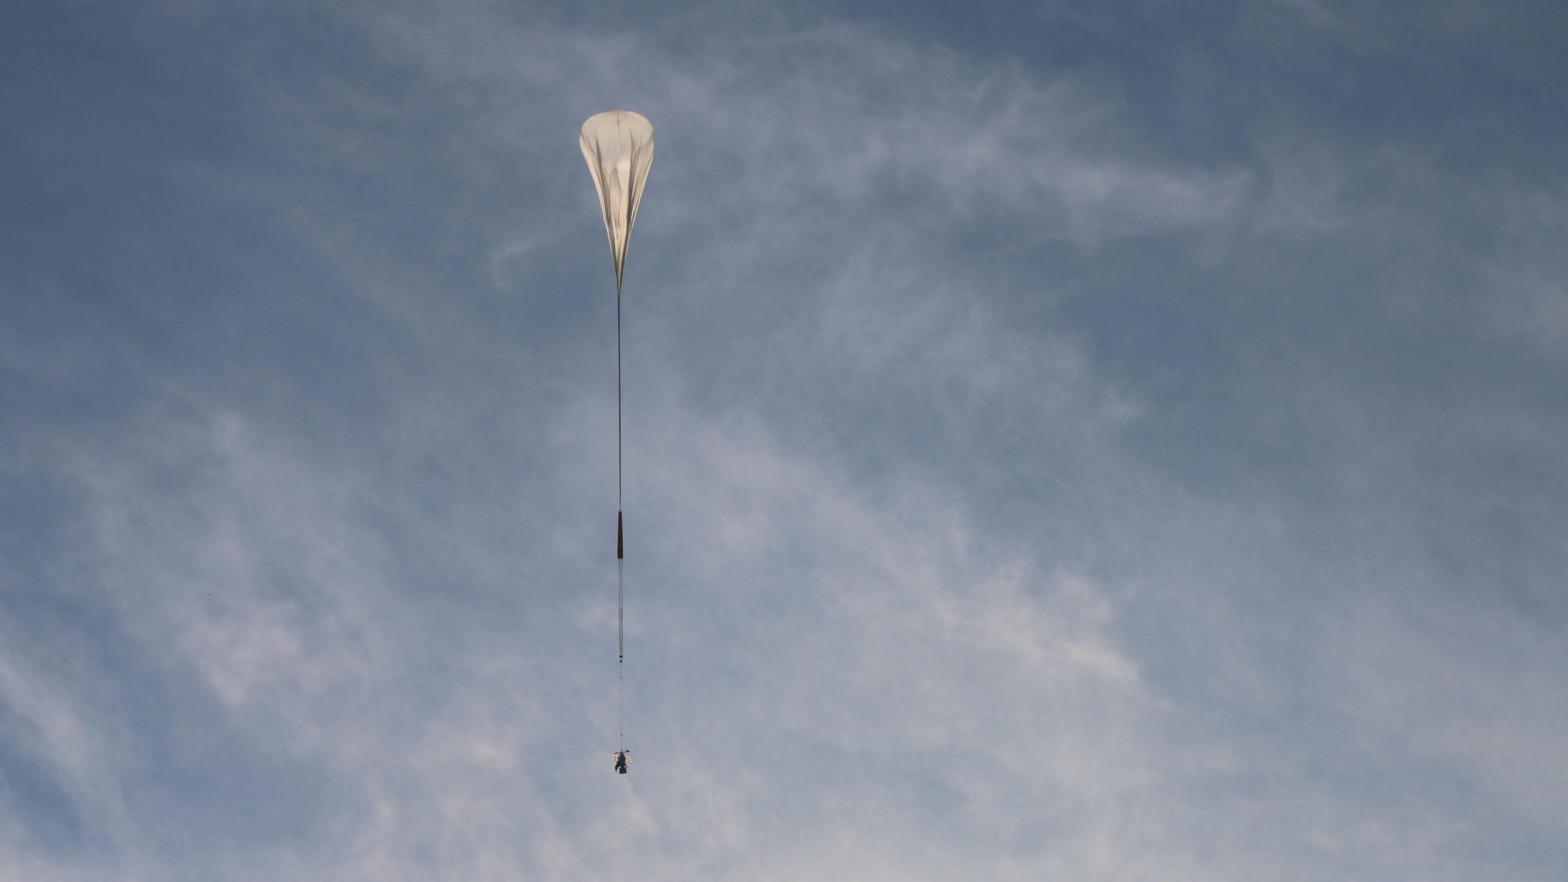 SuperBIT in a 2016 test flight over Texas. (Image: Richard Massey / Durham University)